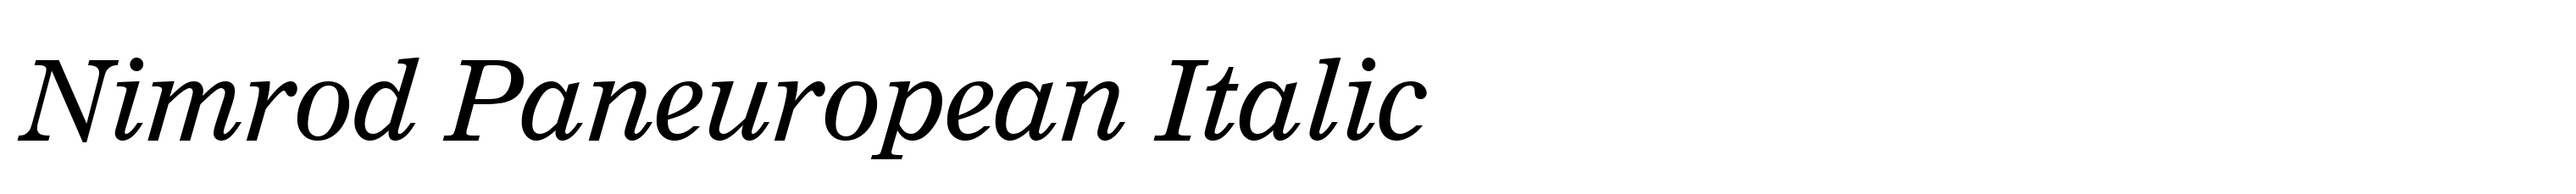 Nimrod Paneuropean Italic